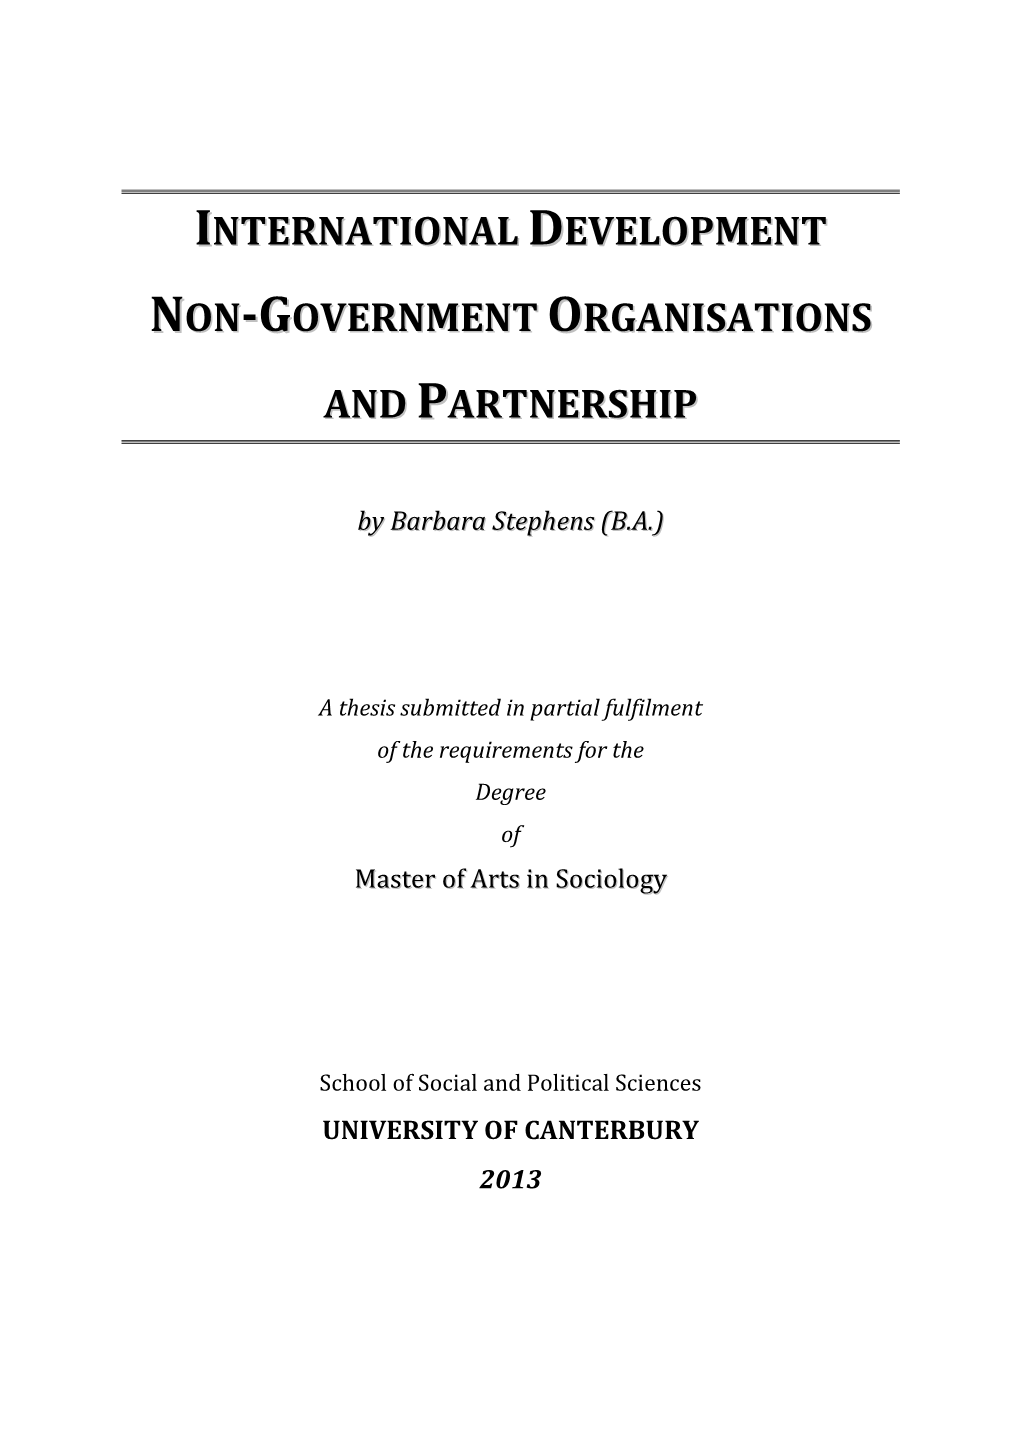 International Development Non-Government Organisations and Partnership